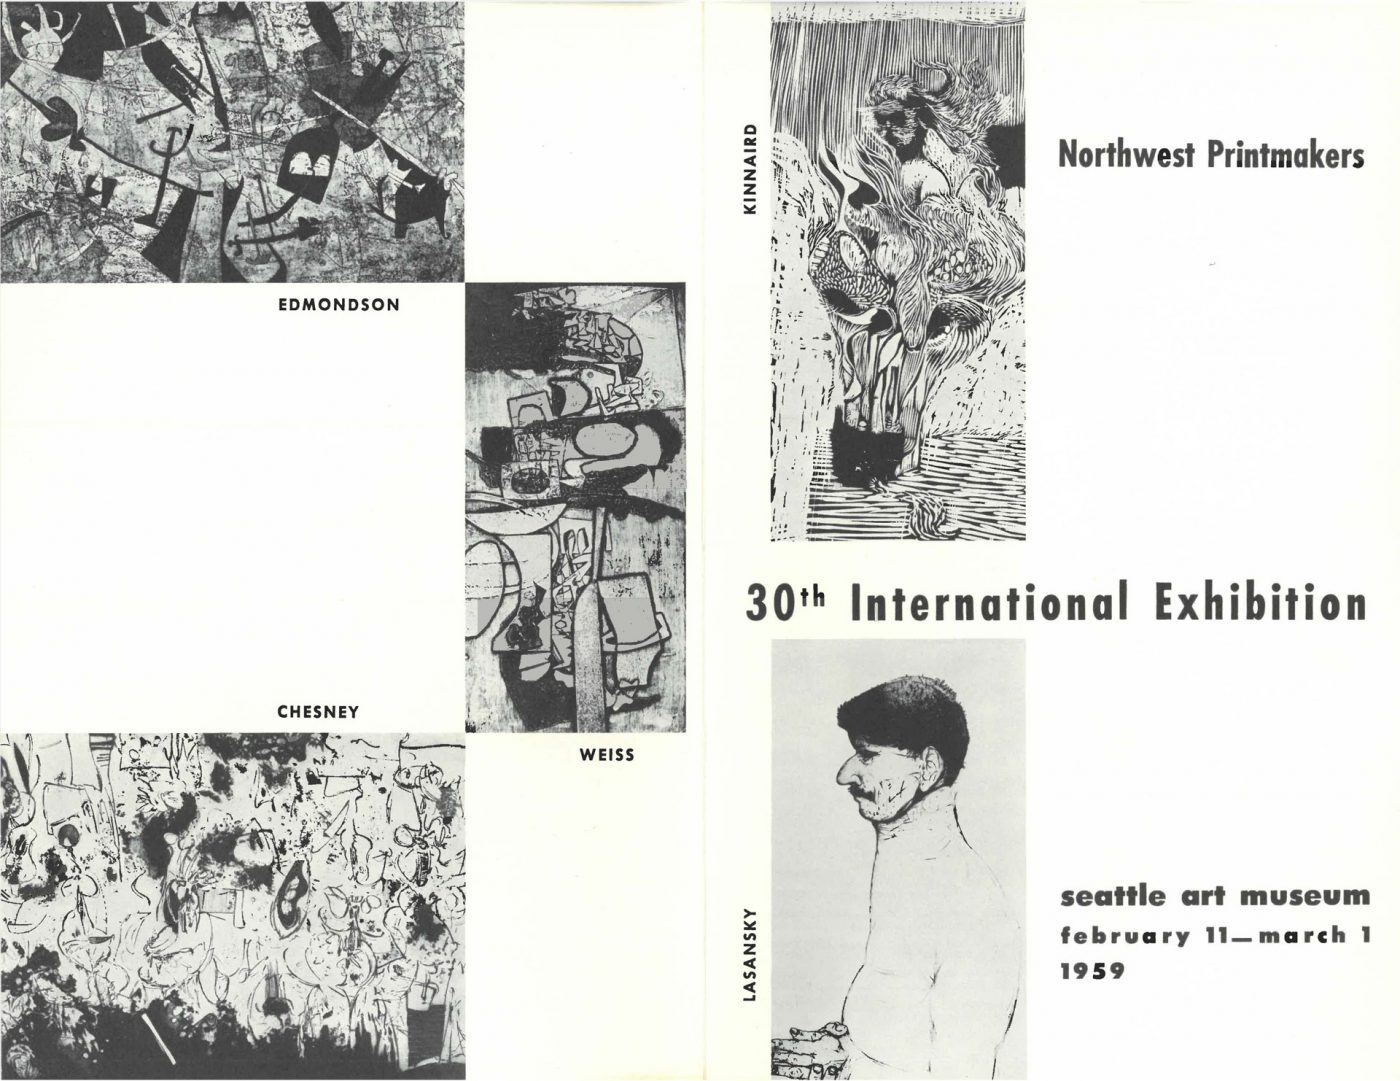 The International Exhibition of Northwest Printmakers